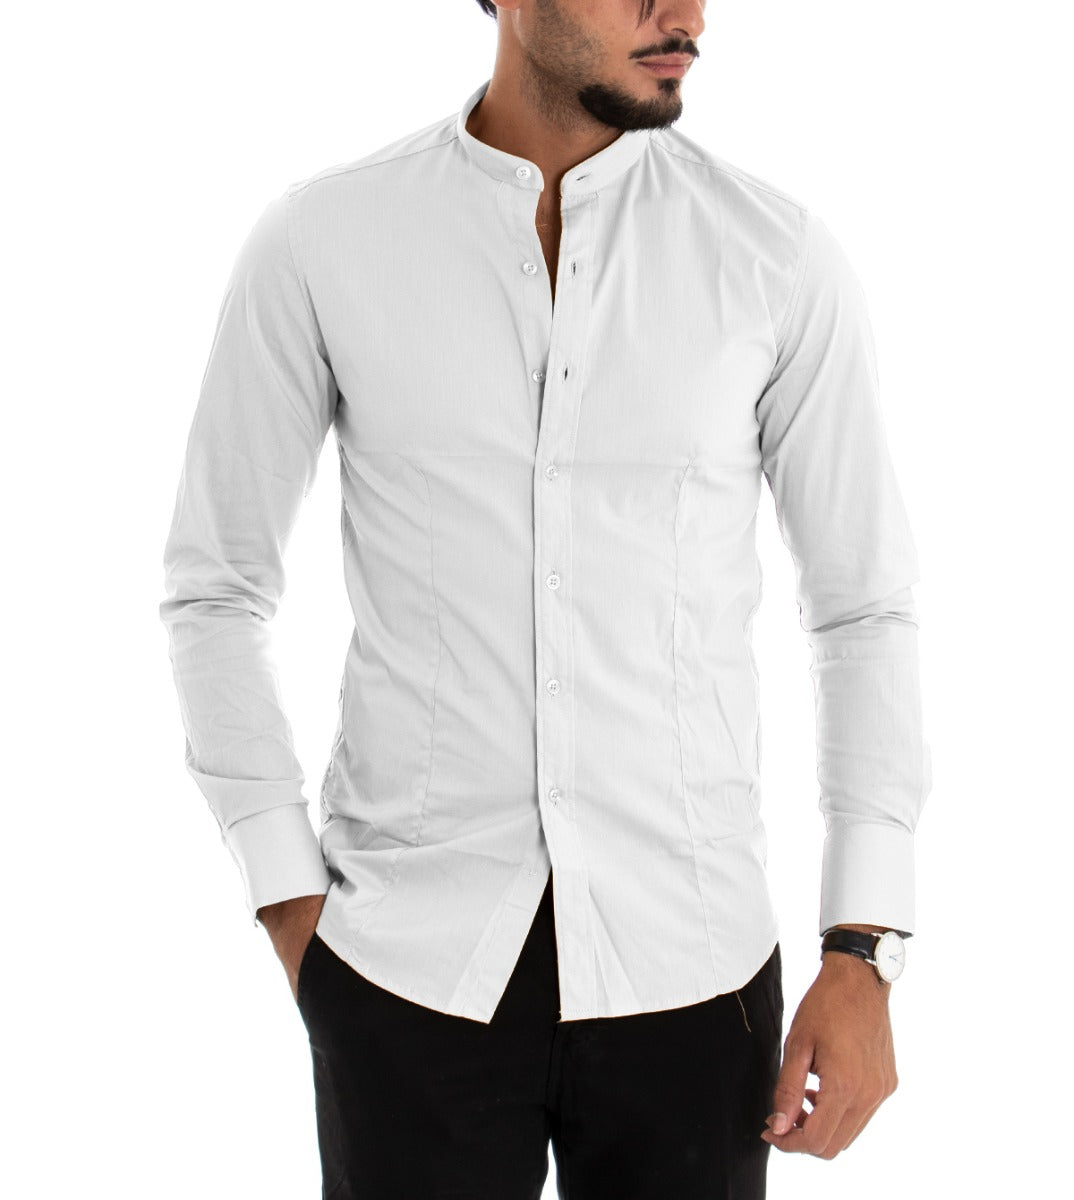 Men's Mandarin Collar Shirt Long Sleeve Slim Fit Basic Casual White Cotton GIOSAL-C1821A